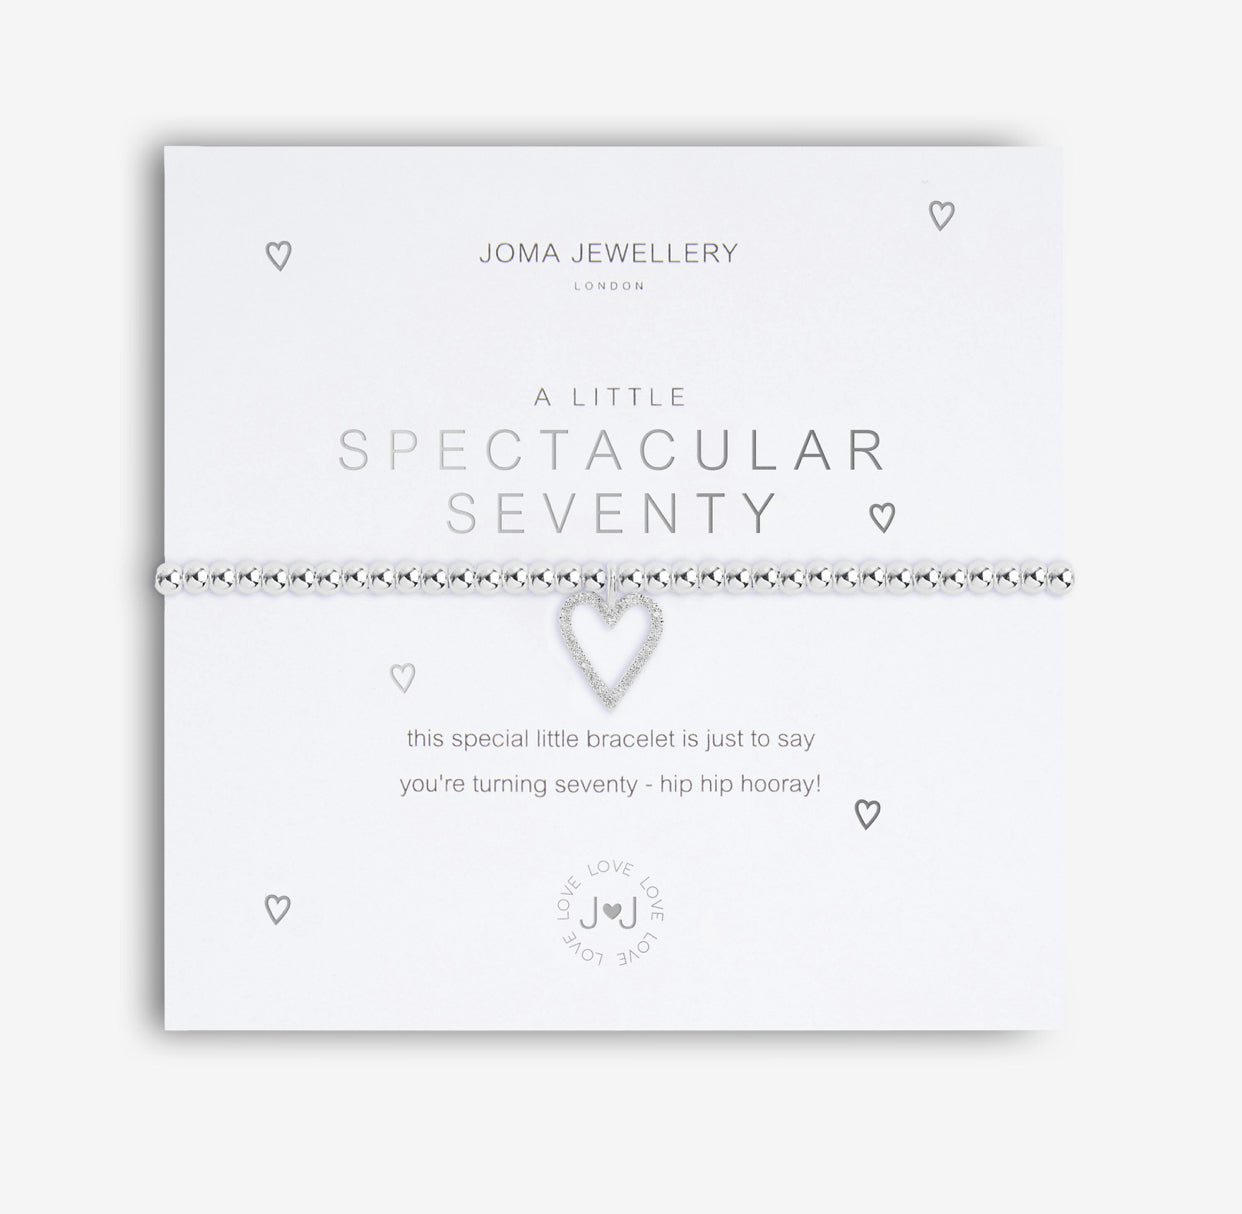 Joma Jewellery 'A Little' Seventy